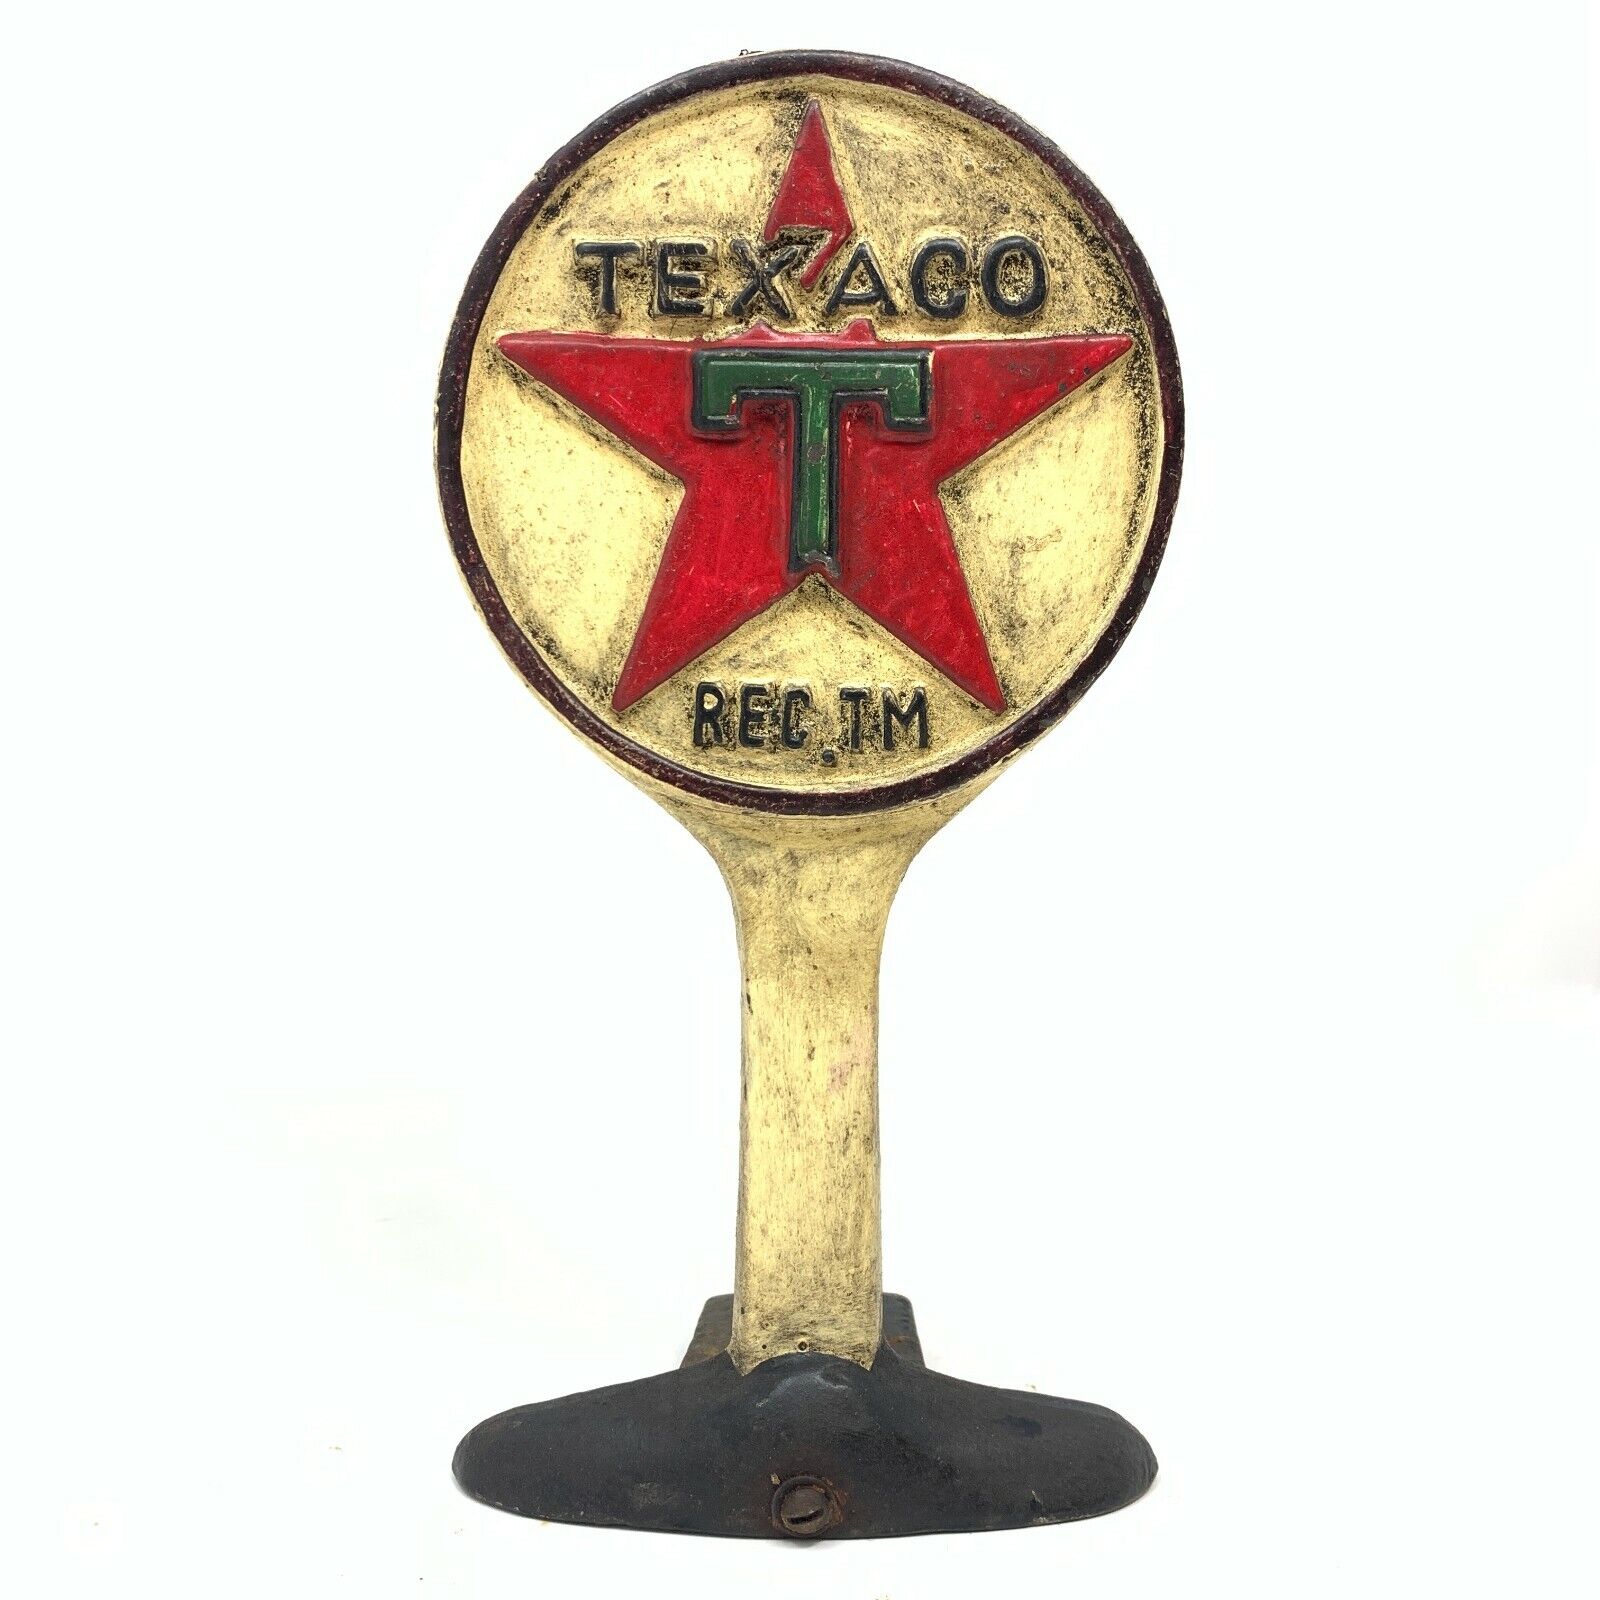 Texaco Doorstop, Cast Iron Paperweight Decor Collectible, Antique Vintage Finish